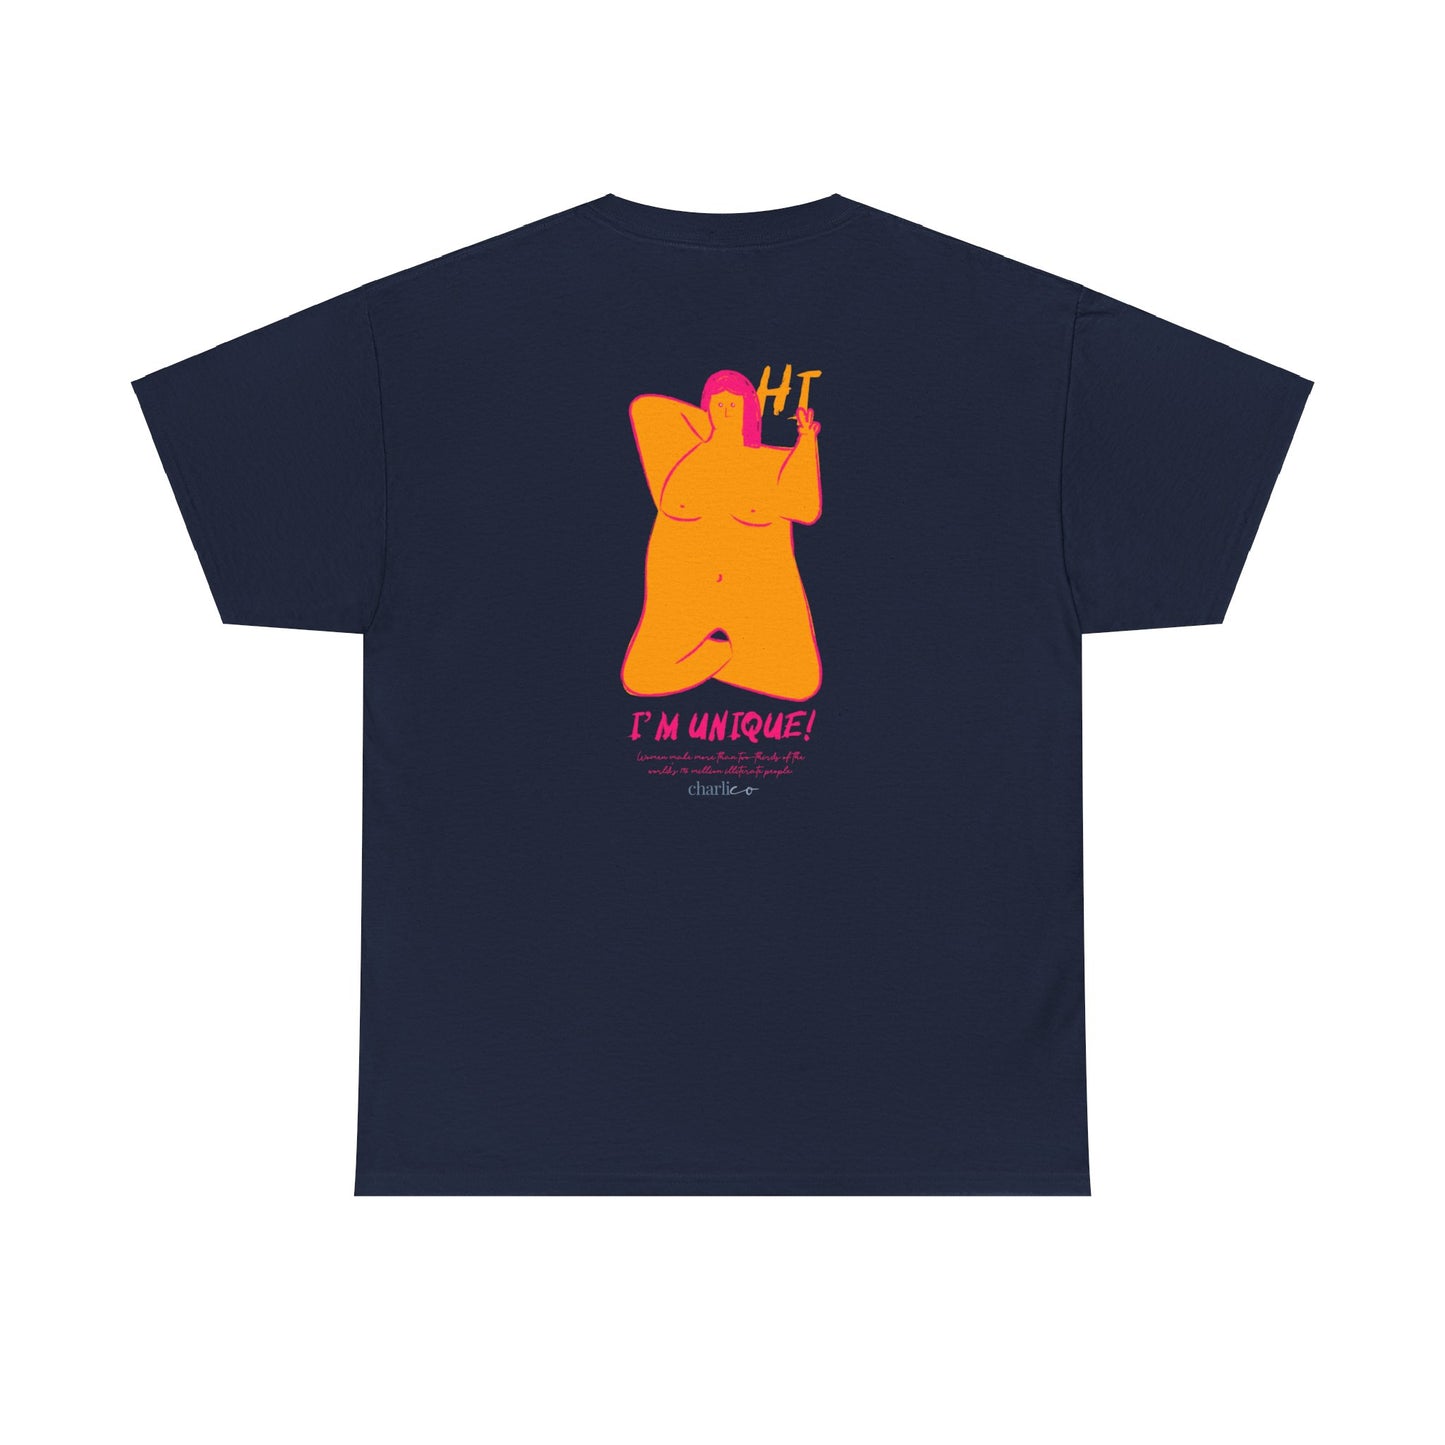 HI I'M UNIQUE Unisex Short-Sleeve Graphic T-Shirt for Adults